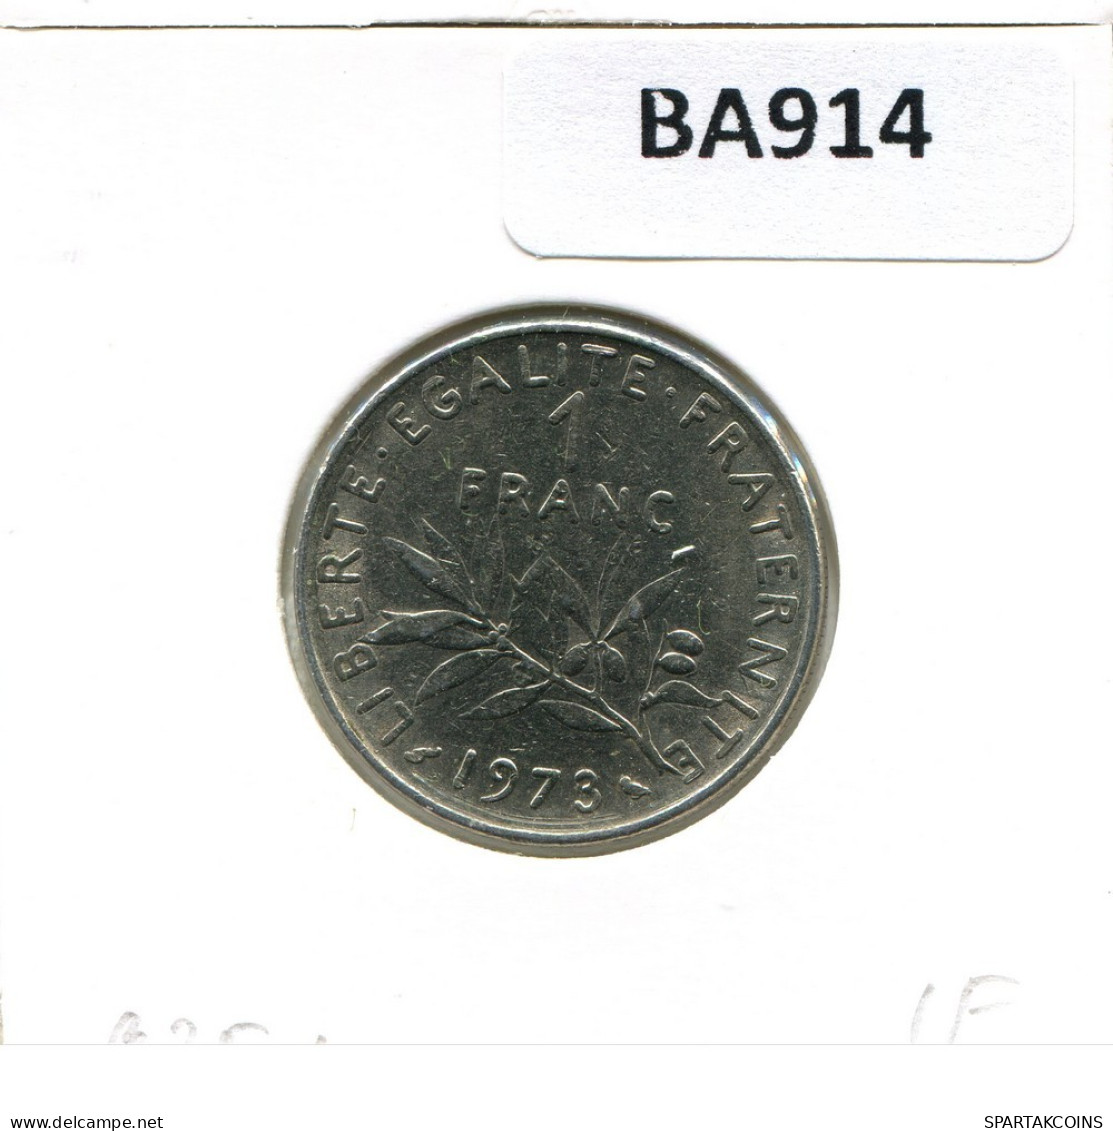 1 FRANC 1973 FRANCE Coin French Coin #BA914.U.A - 1 Franc